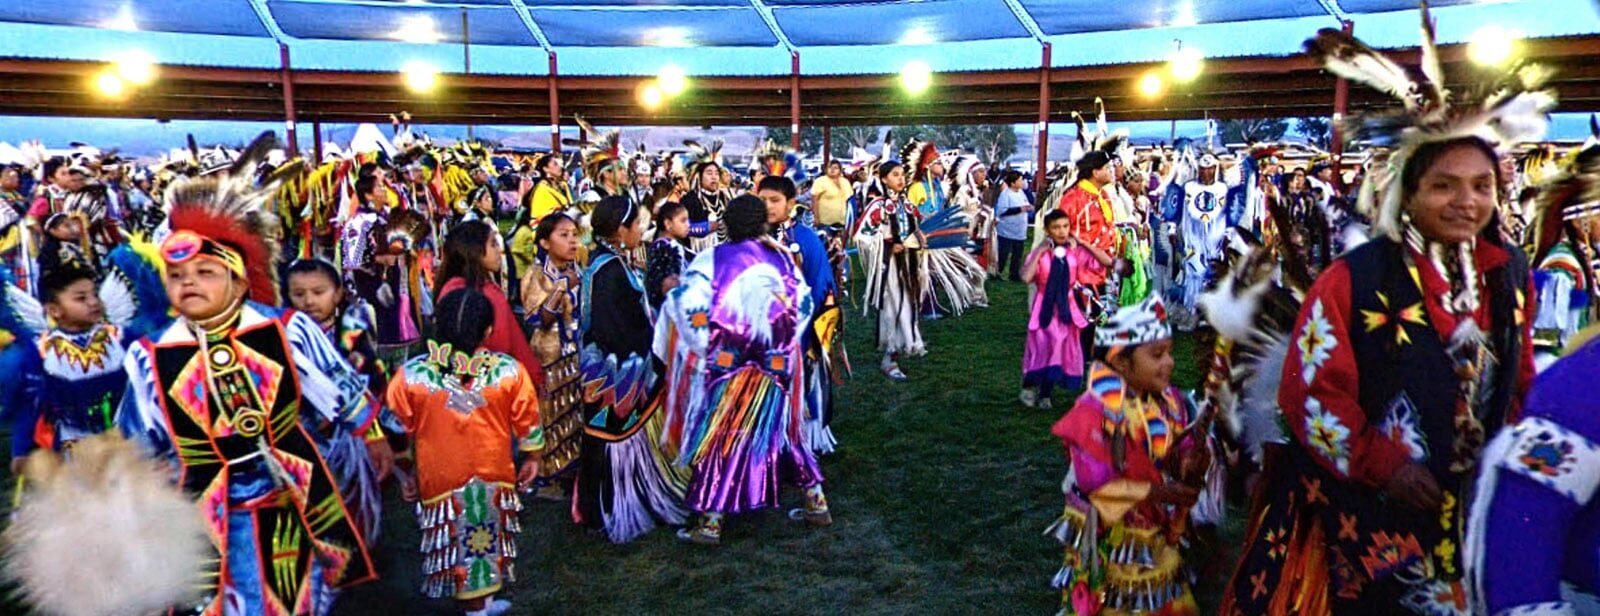 Shoshone-Bannock Indian Festival in Fort Hall Idaho